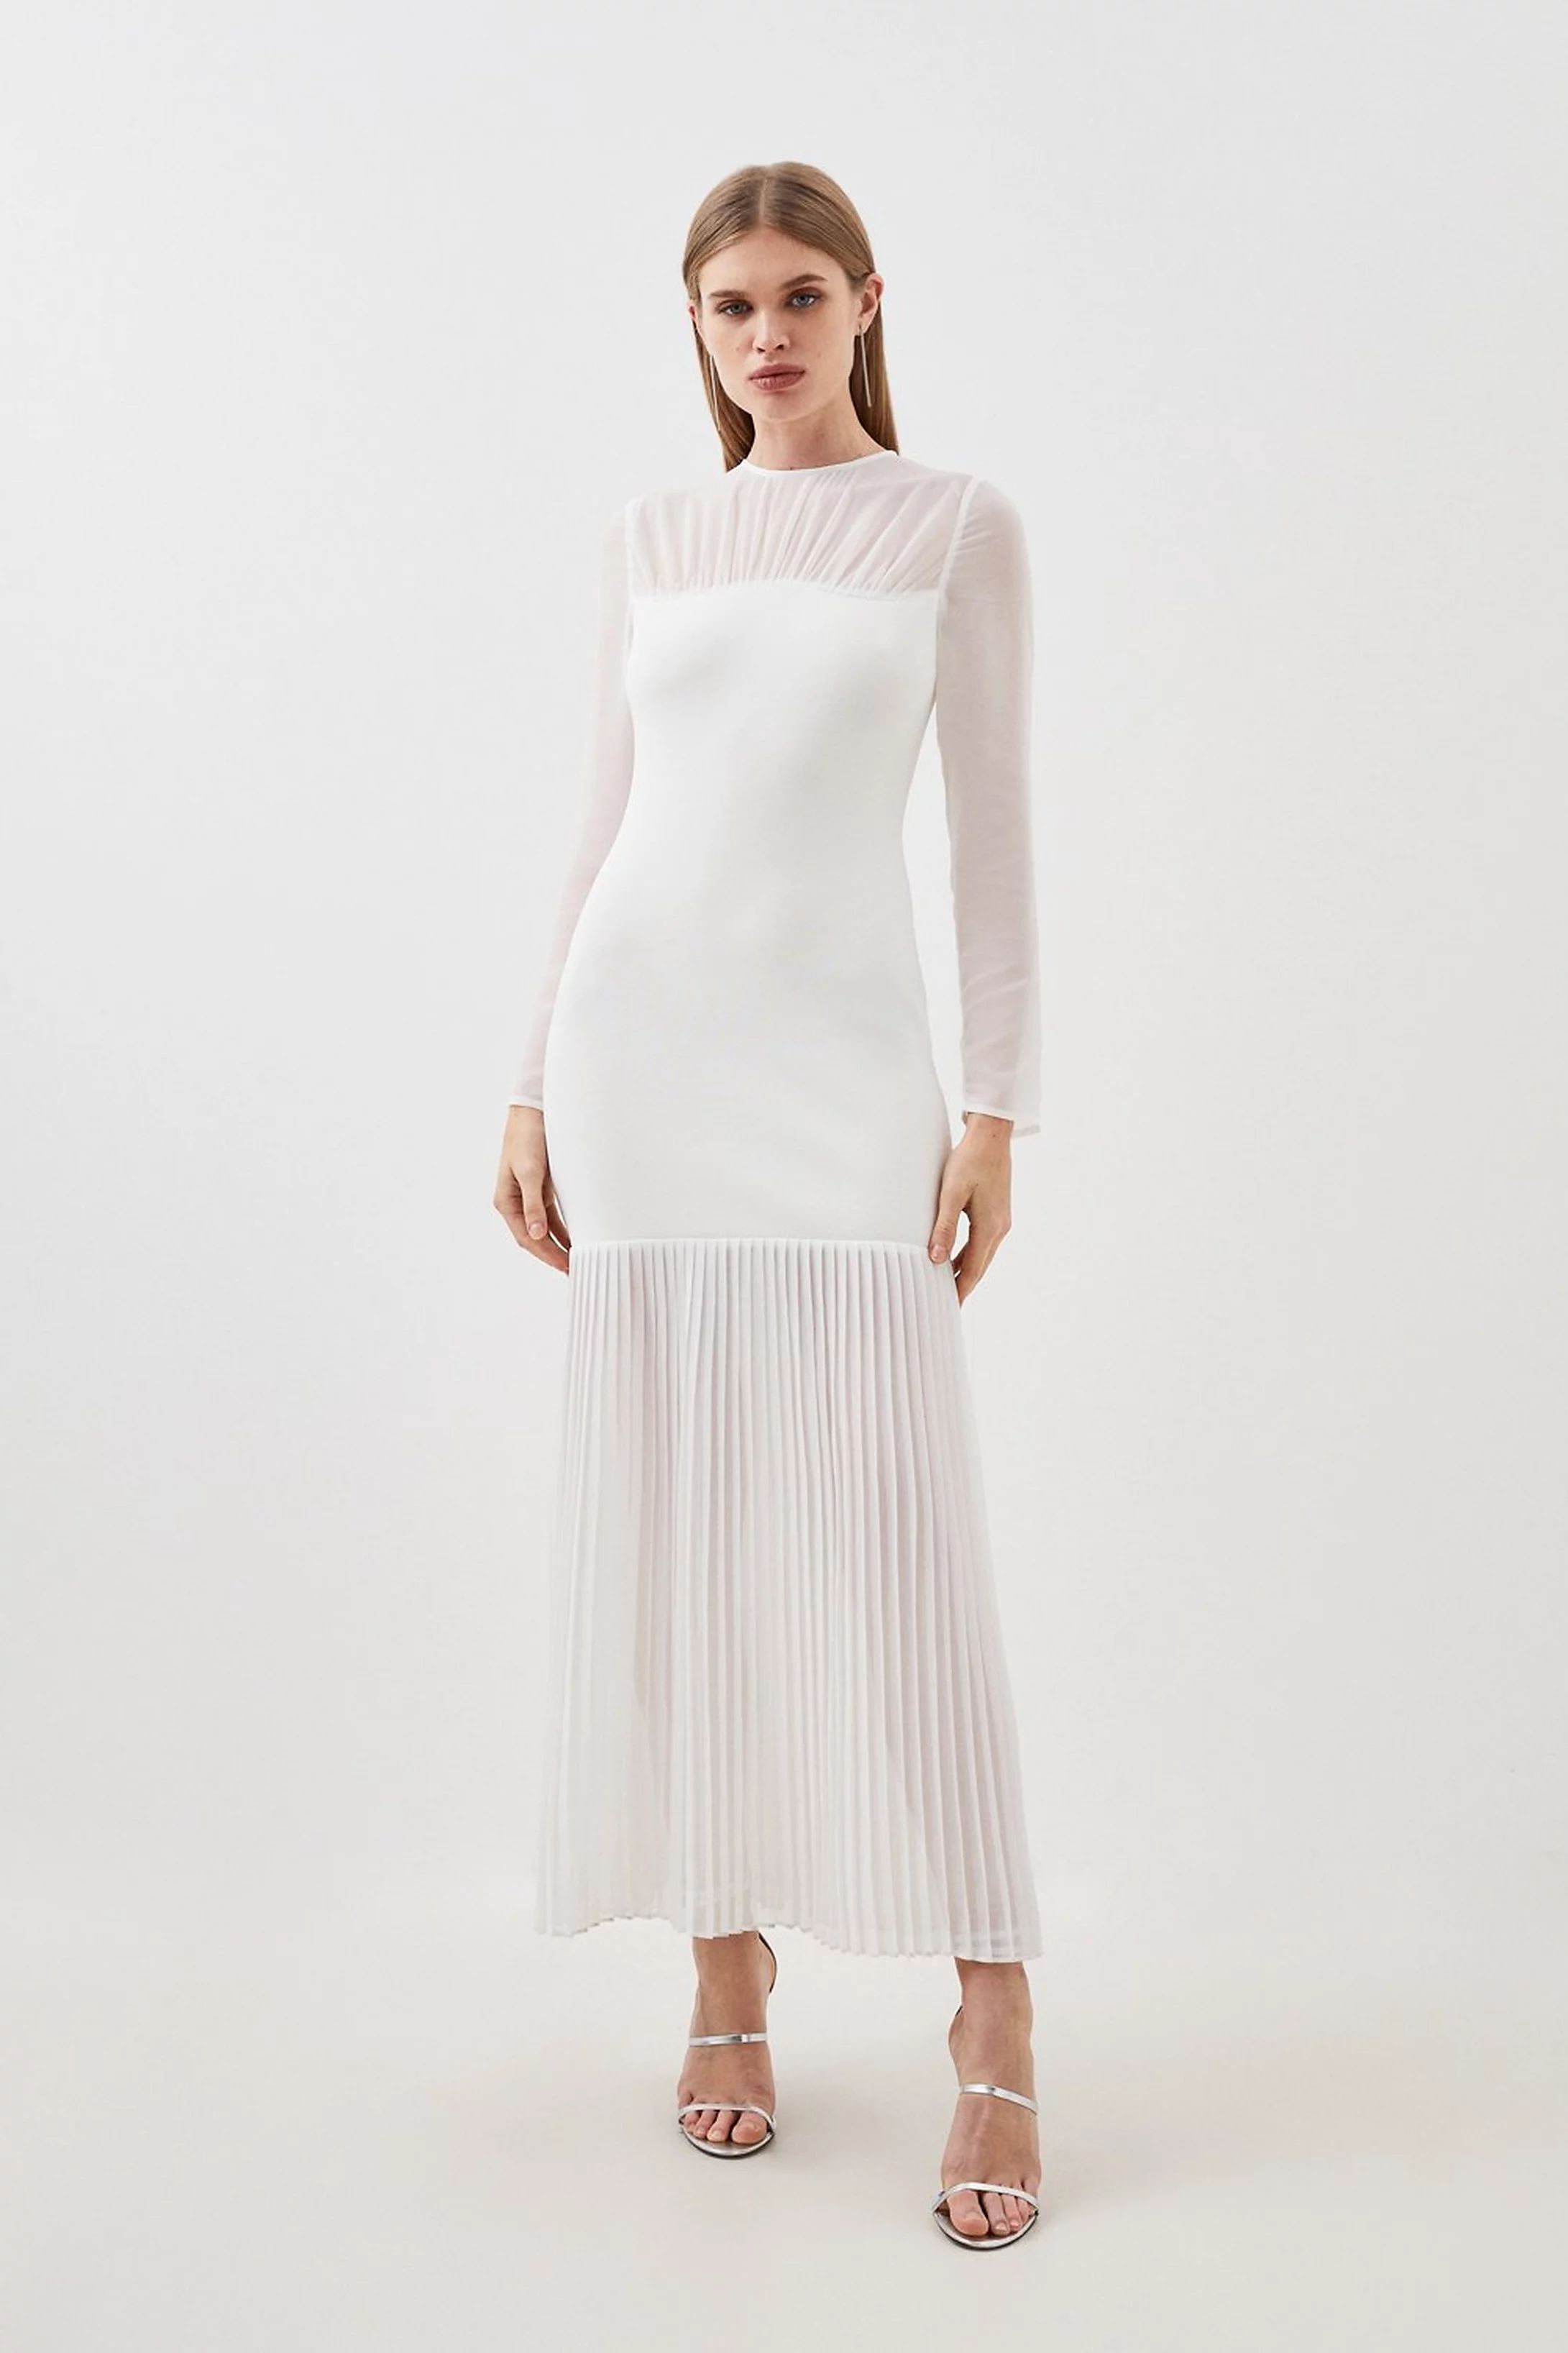 Bandage Figure Form Woven Mix Knit Dress | Karen Millen US